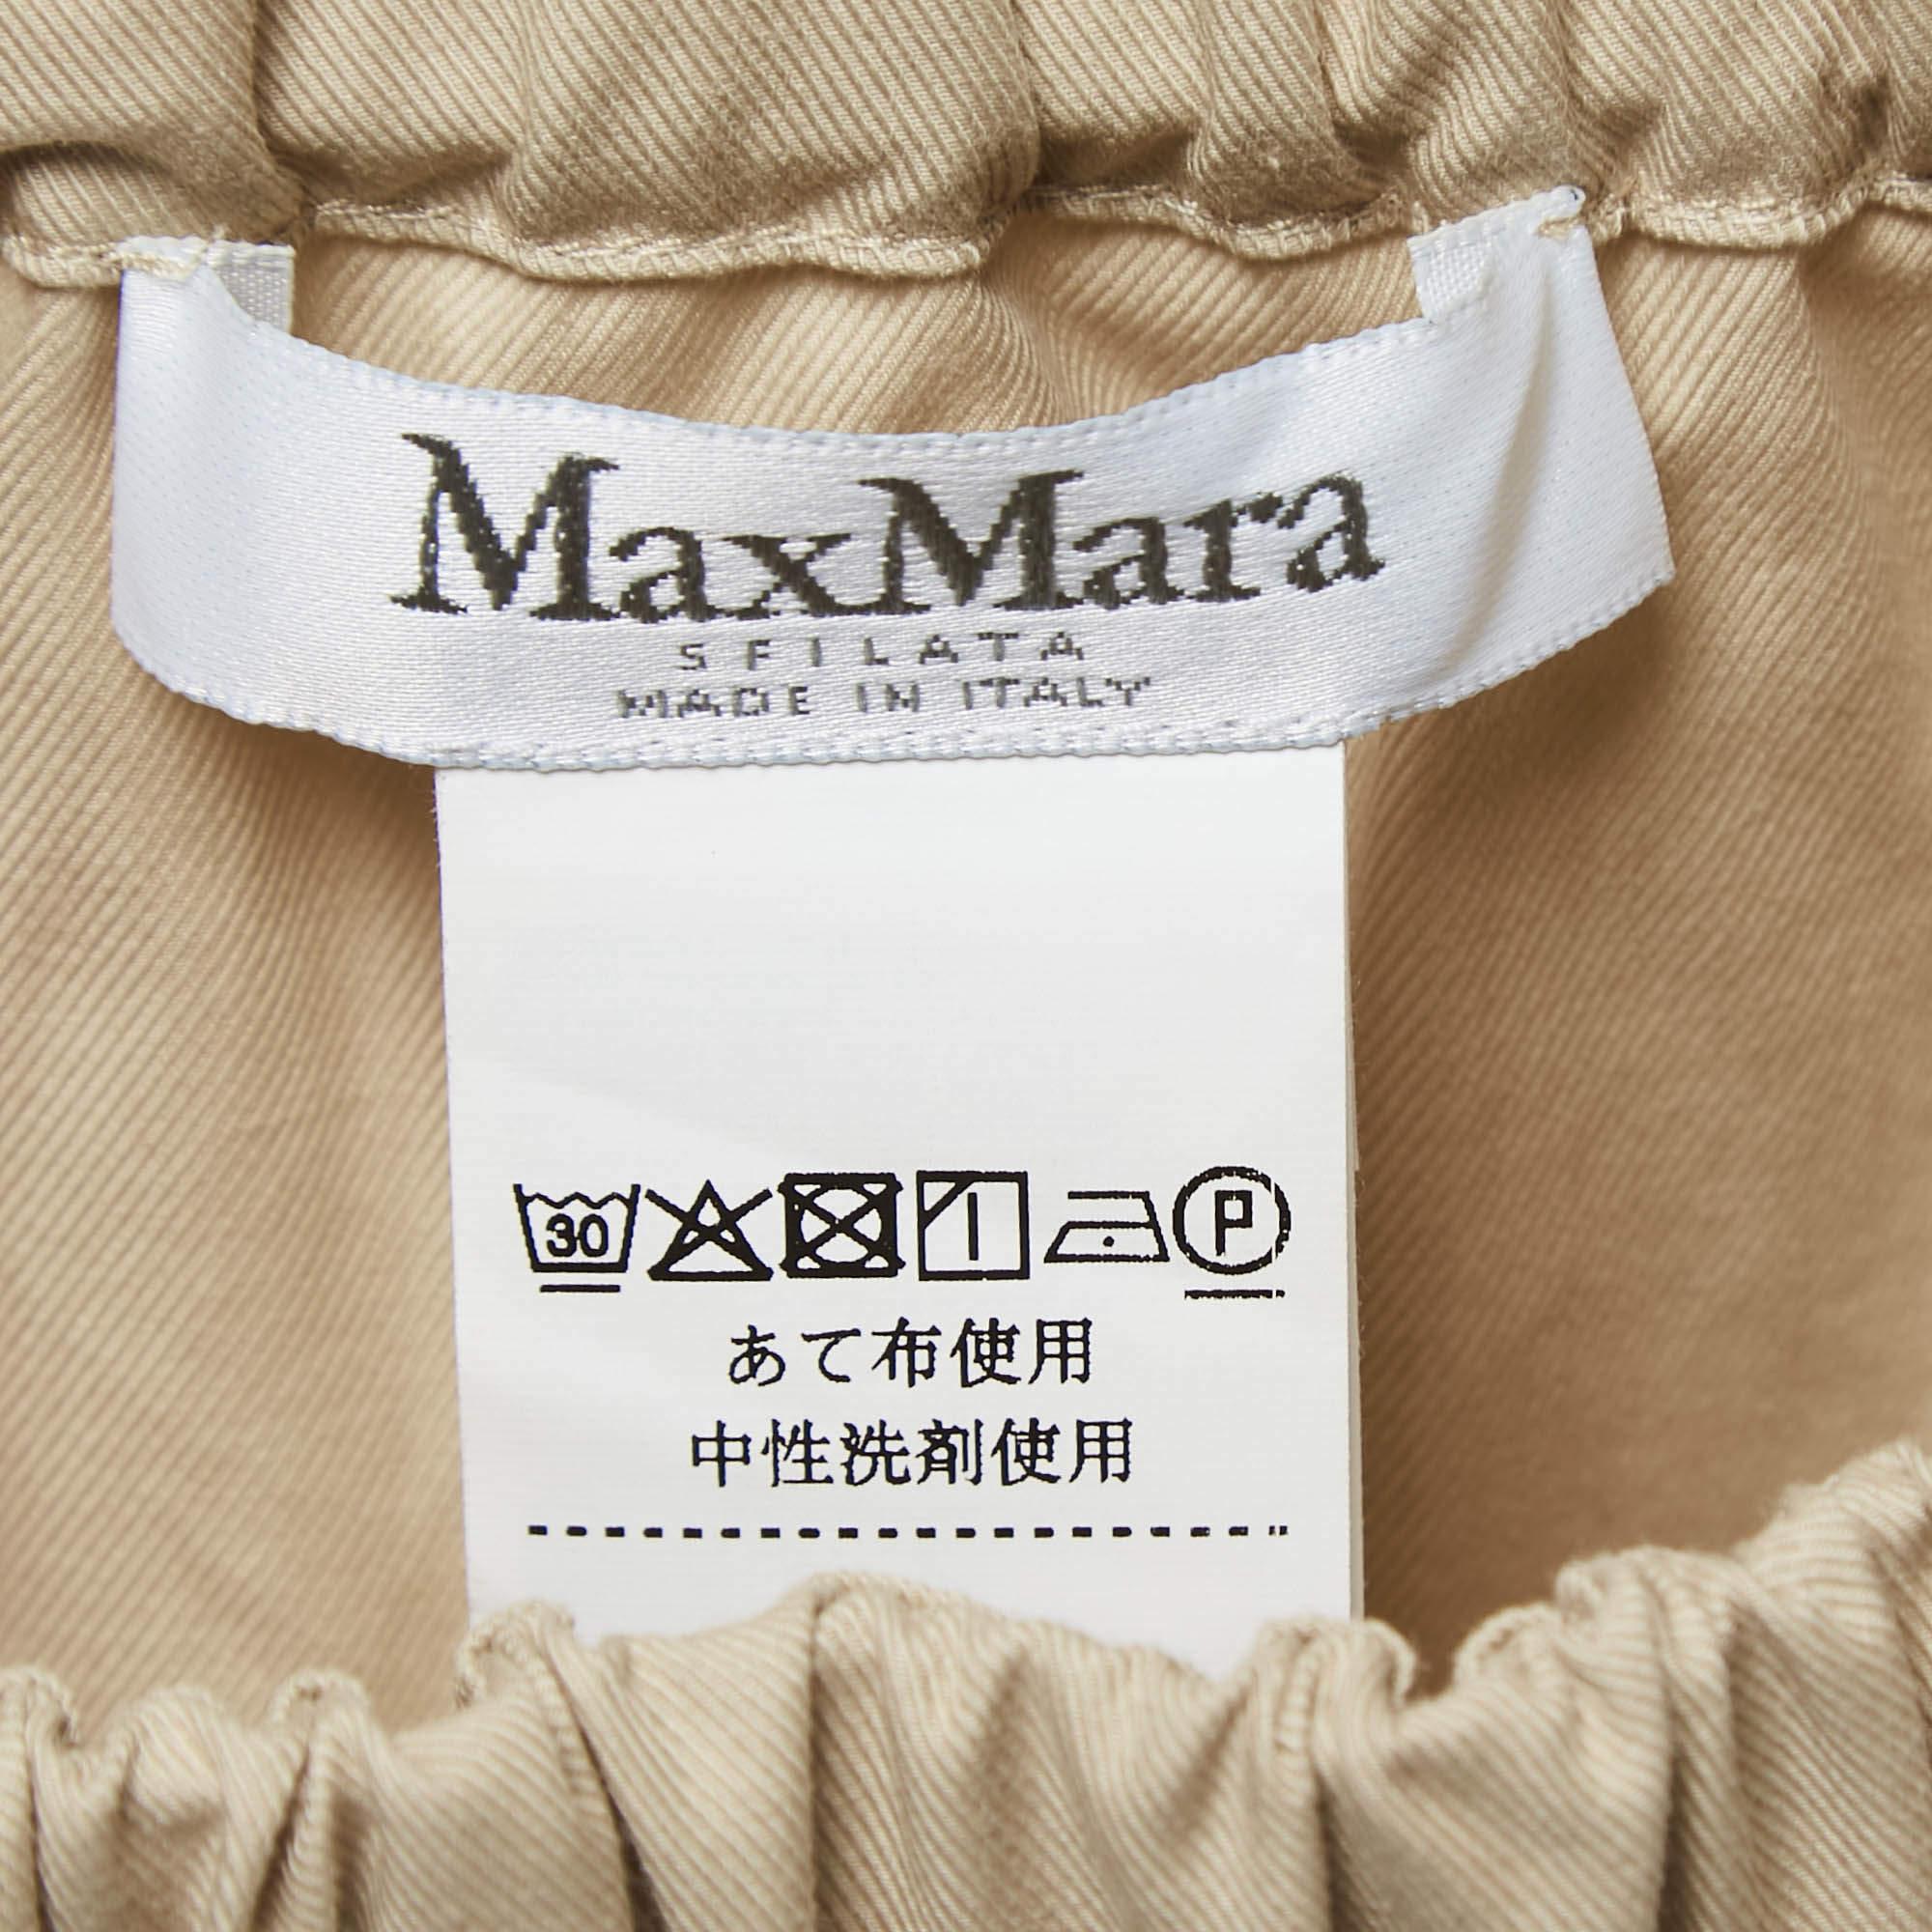 Max Mara Sfilata Beige Cotton Off Shoulder Pocket Detail Mini Dress S In Excellent Condition For Sale In Dubai, Al Qouz 2